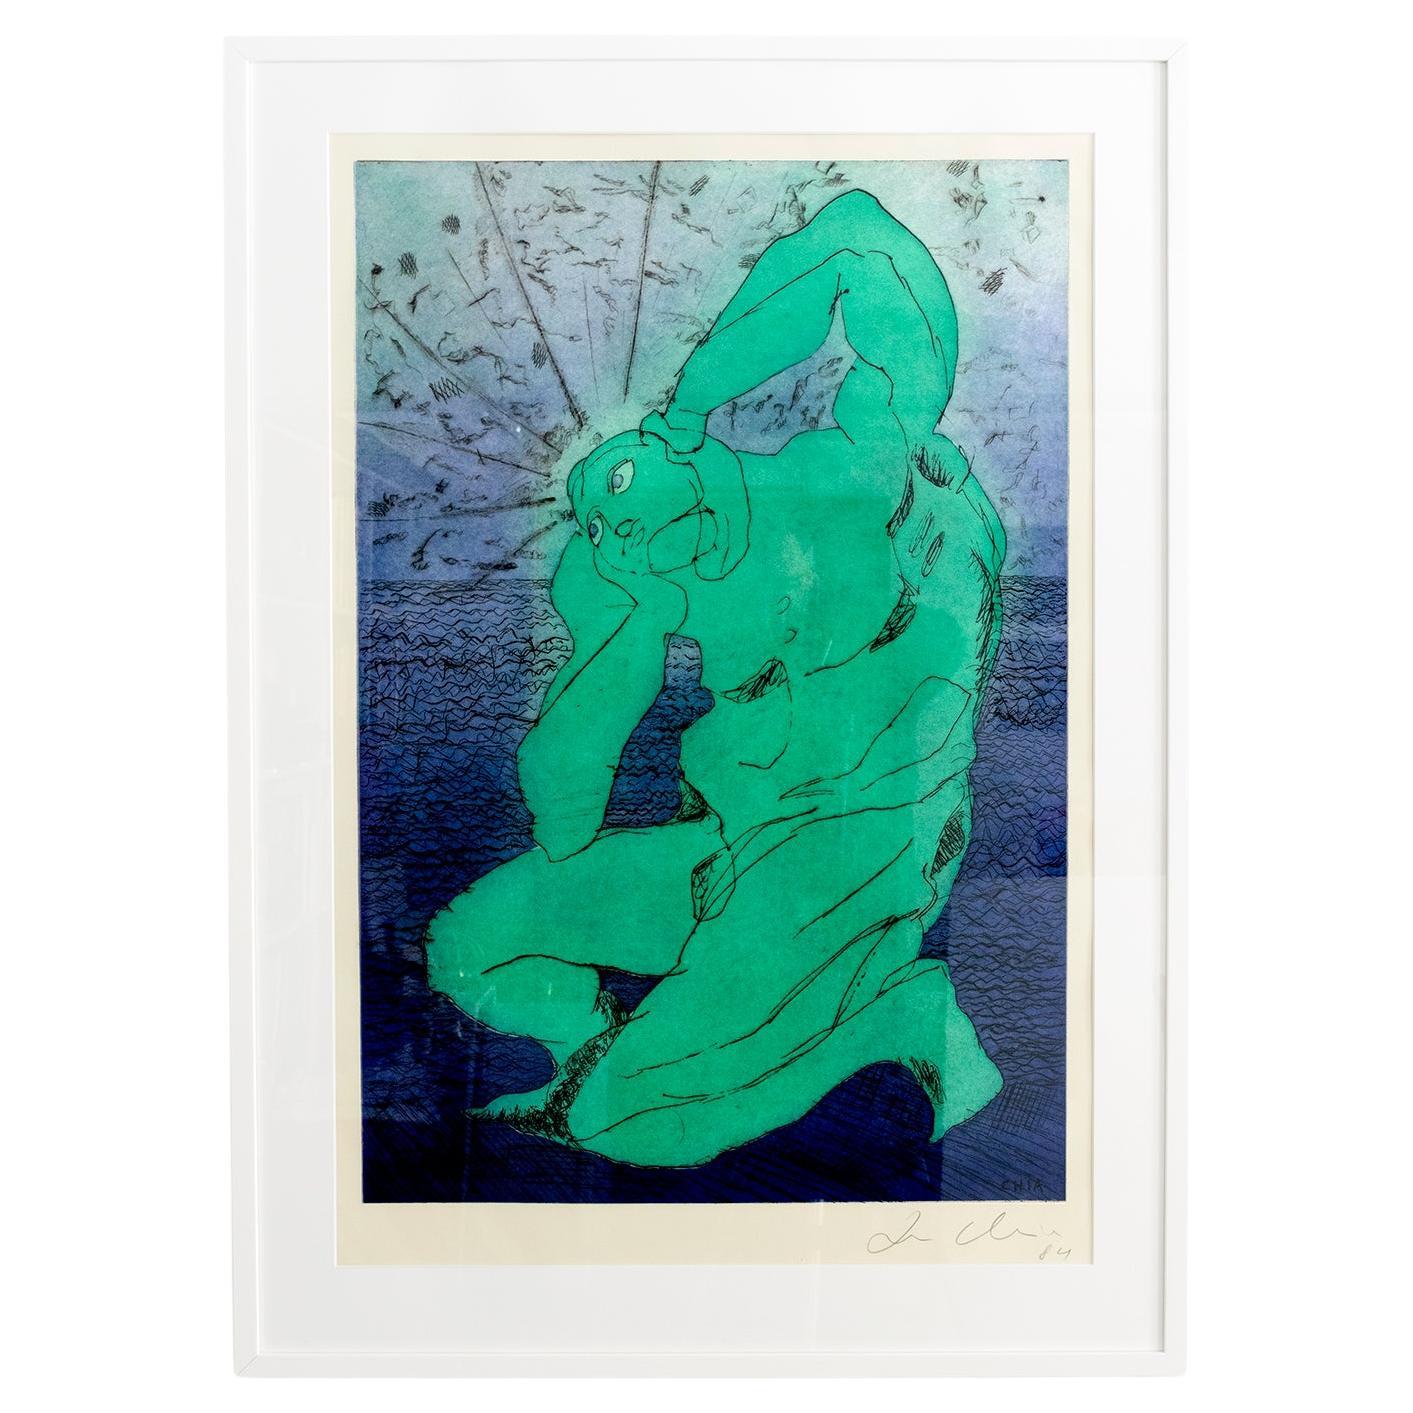 Sandro Chia Aquatint Print in Green & Blue, « Man & Sea » Post Modern